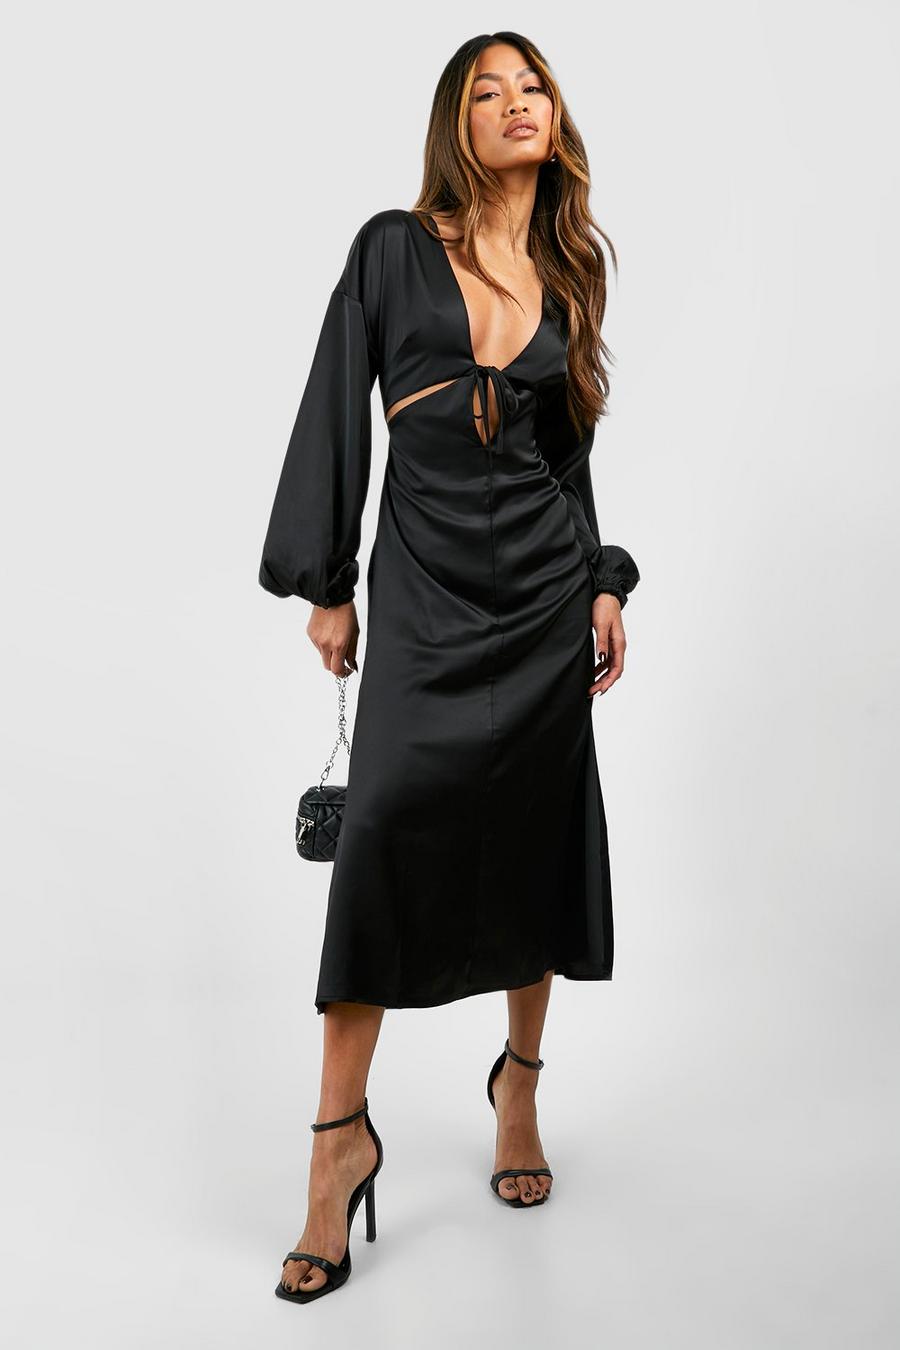 Black Satin Batwing Cut Out Slip Midaxi Dress